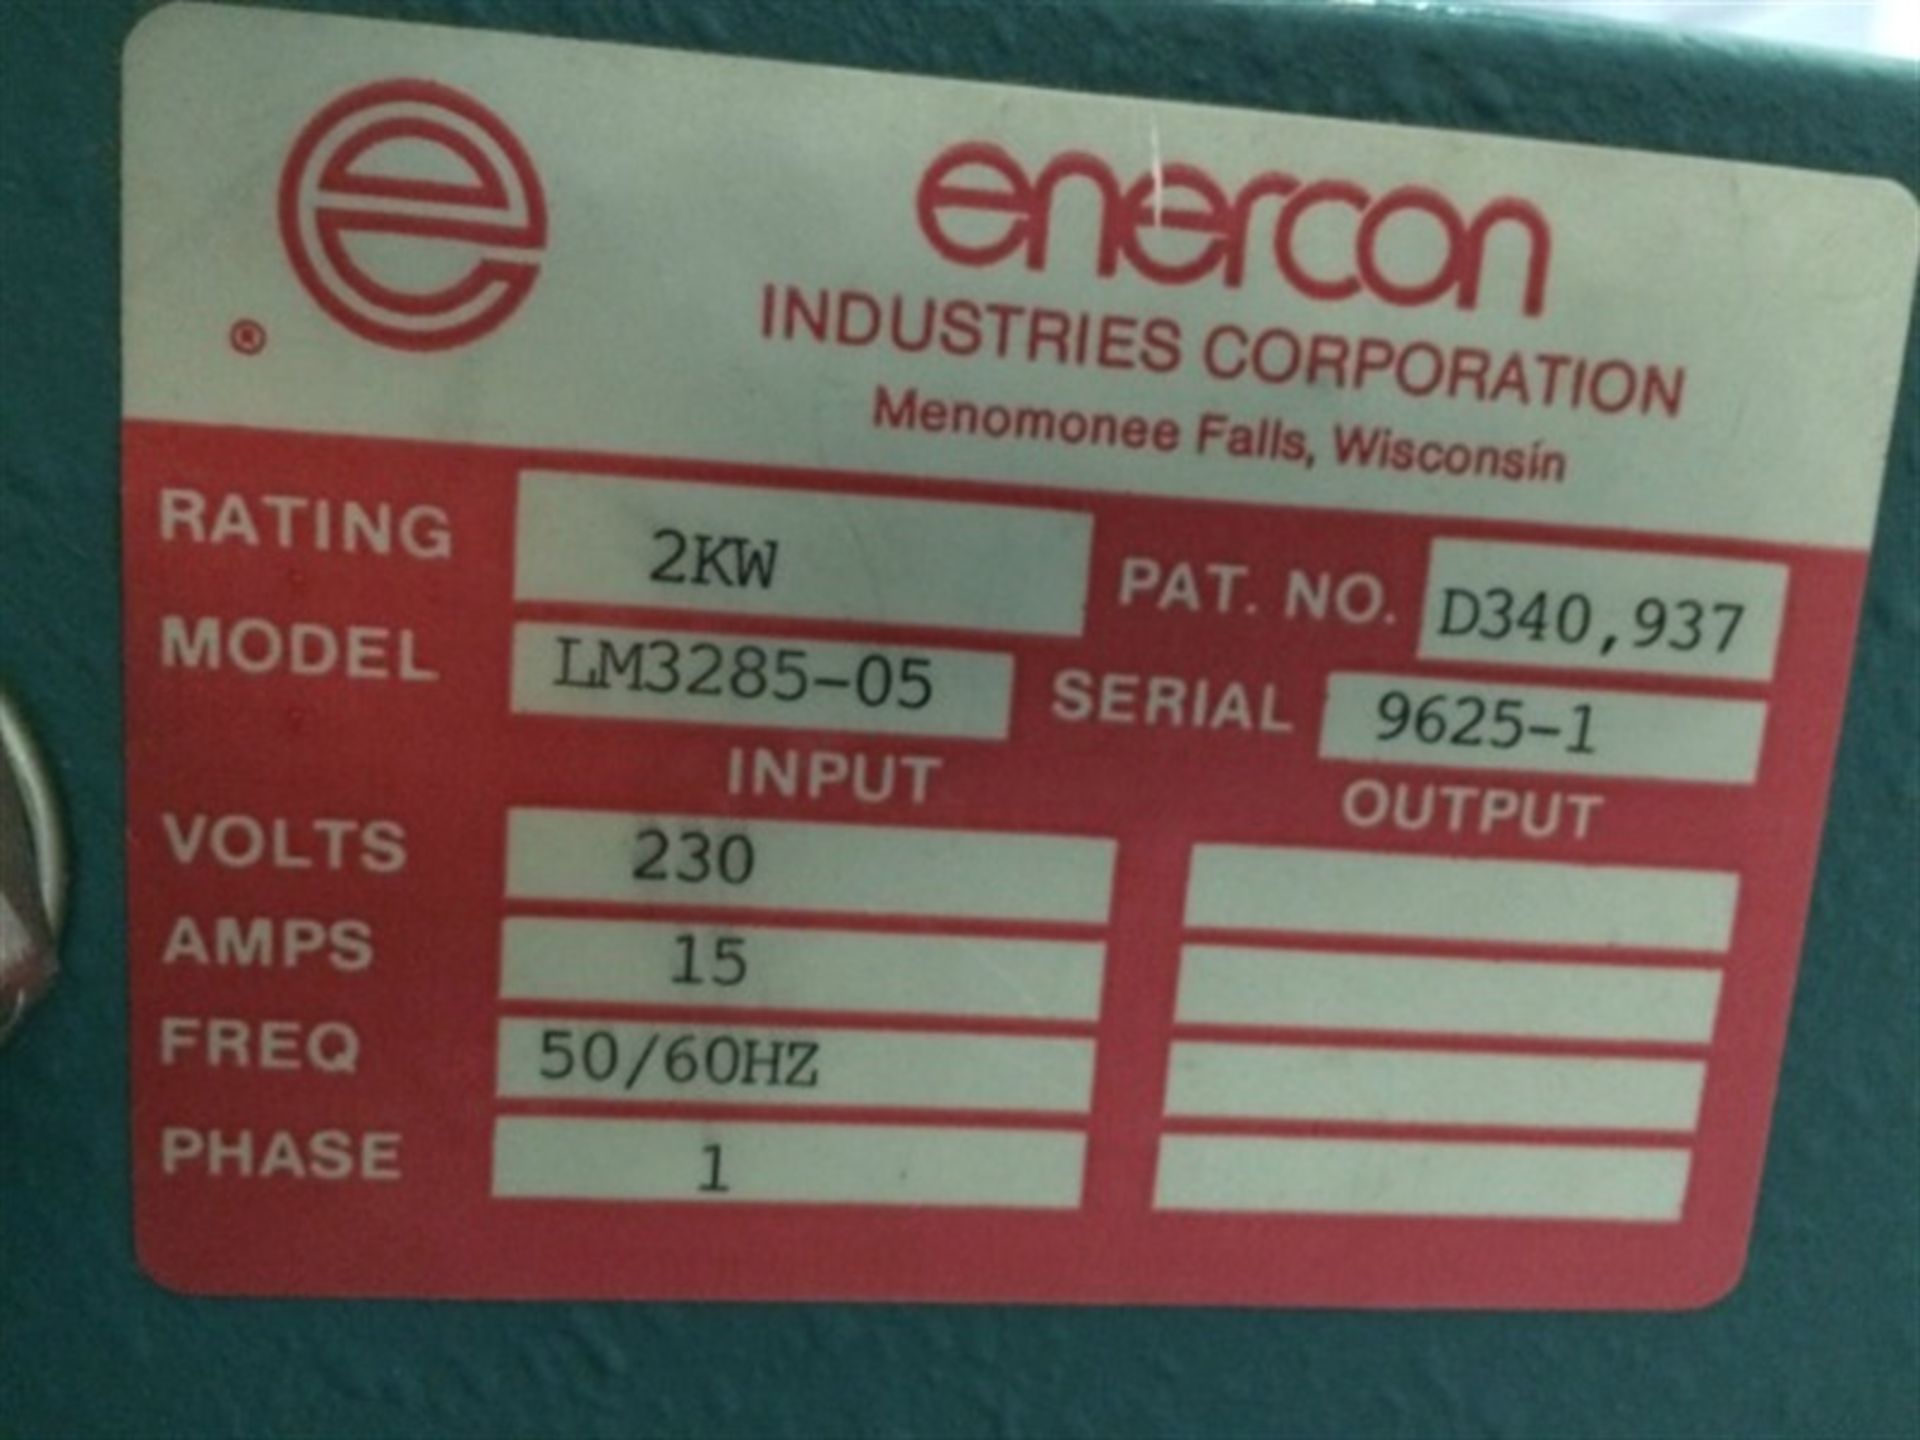 Enercon Model LM3285-05 2kW Induction Sealer - Image 3 of 3